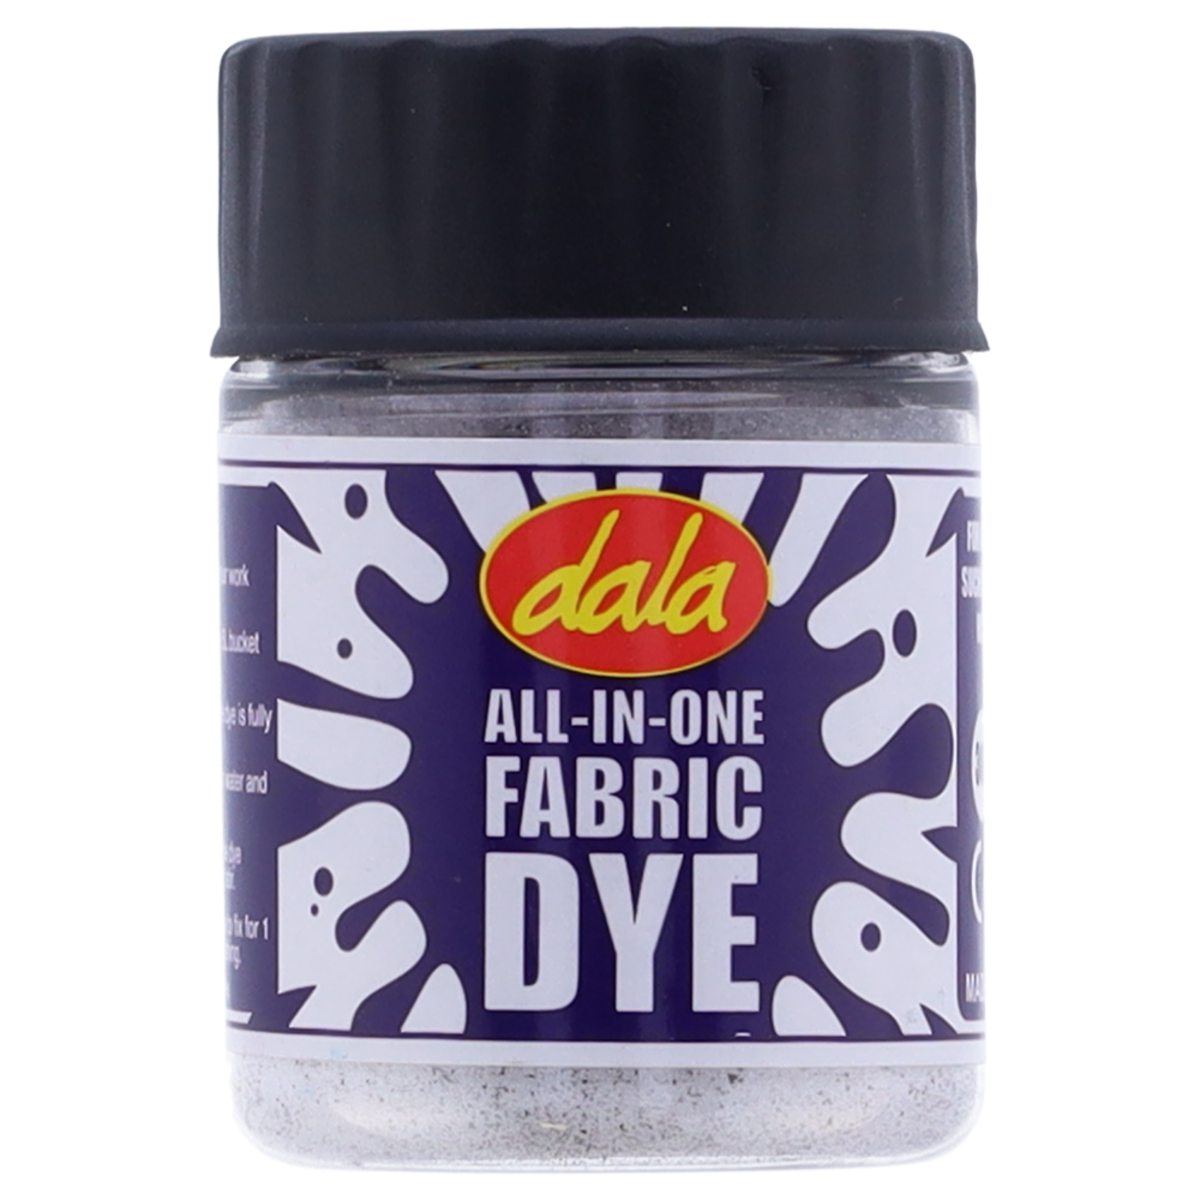 All-In-One Dye - - Dala